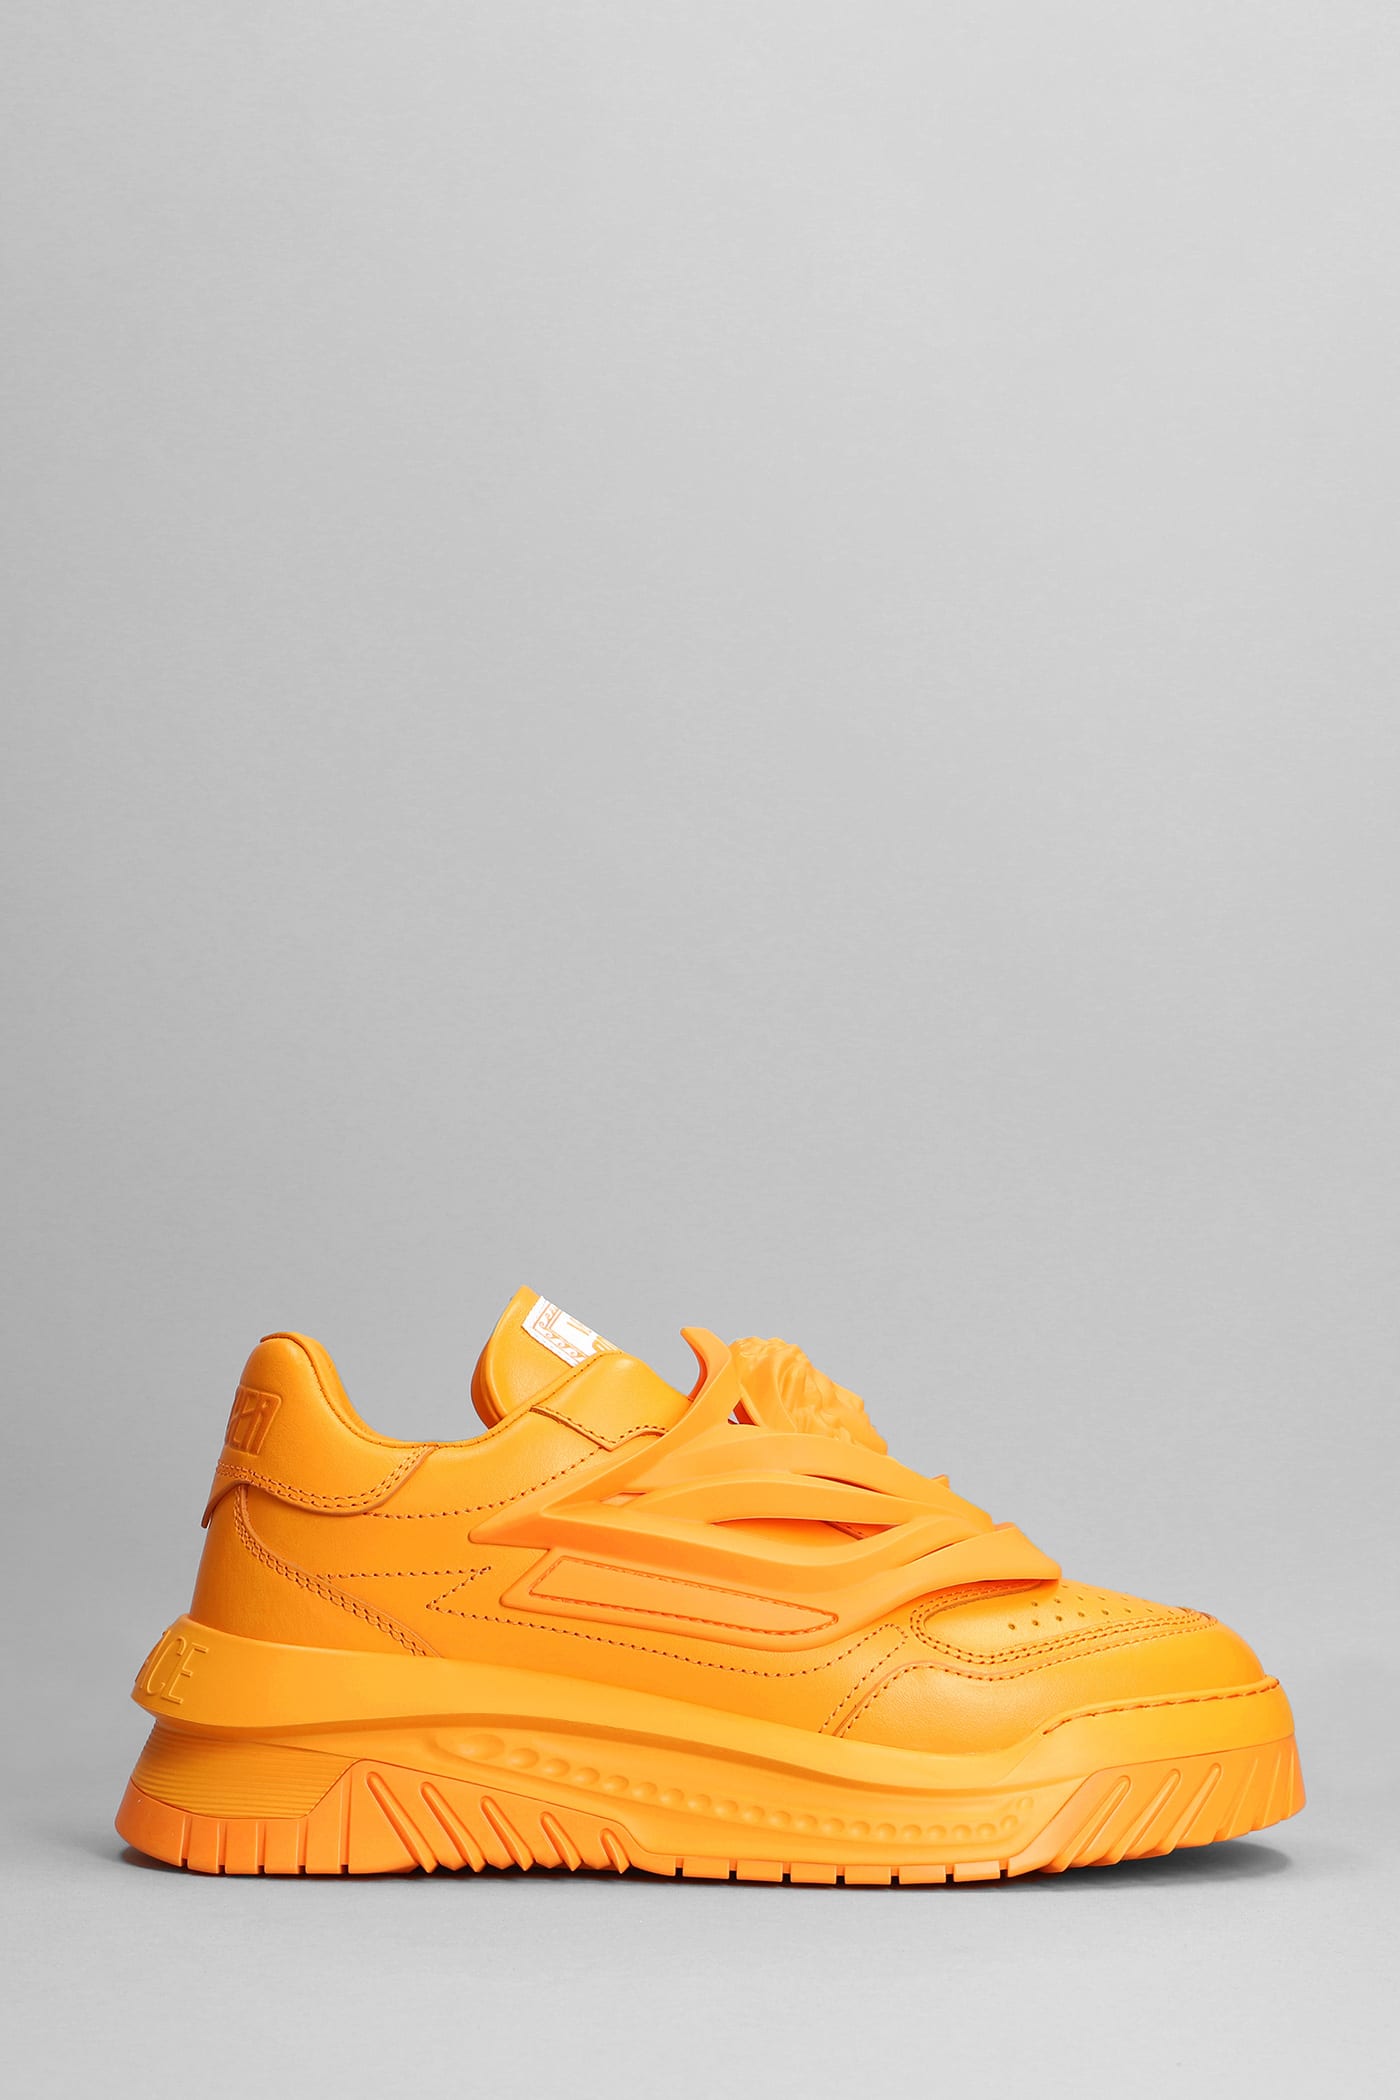 Versace Odissea Sneakers In Orange Leather